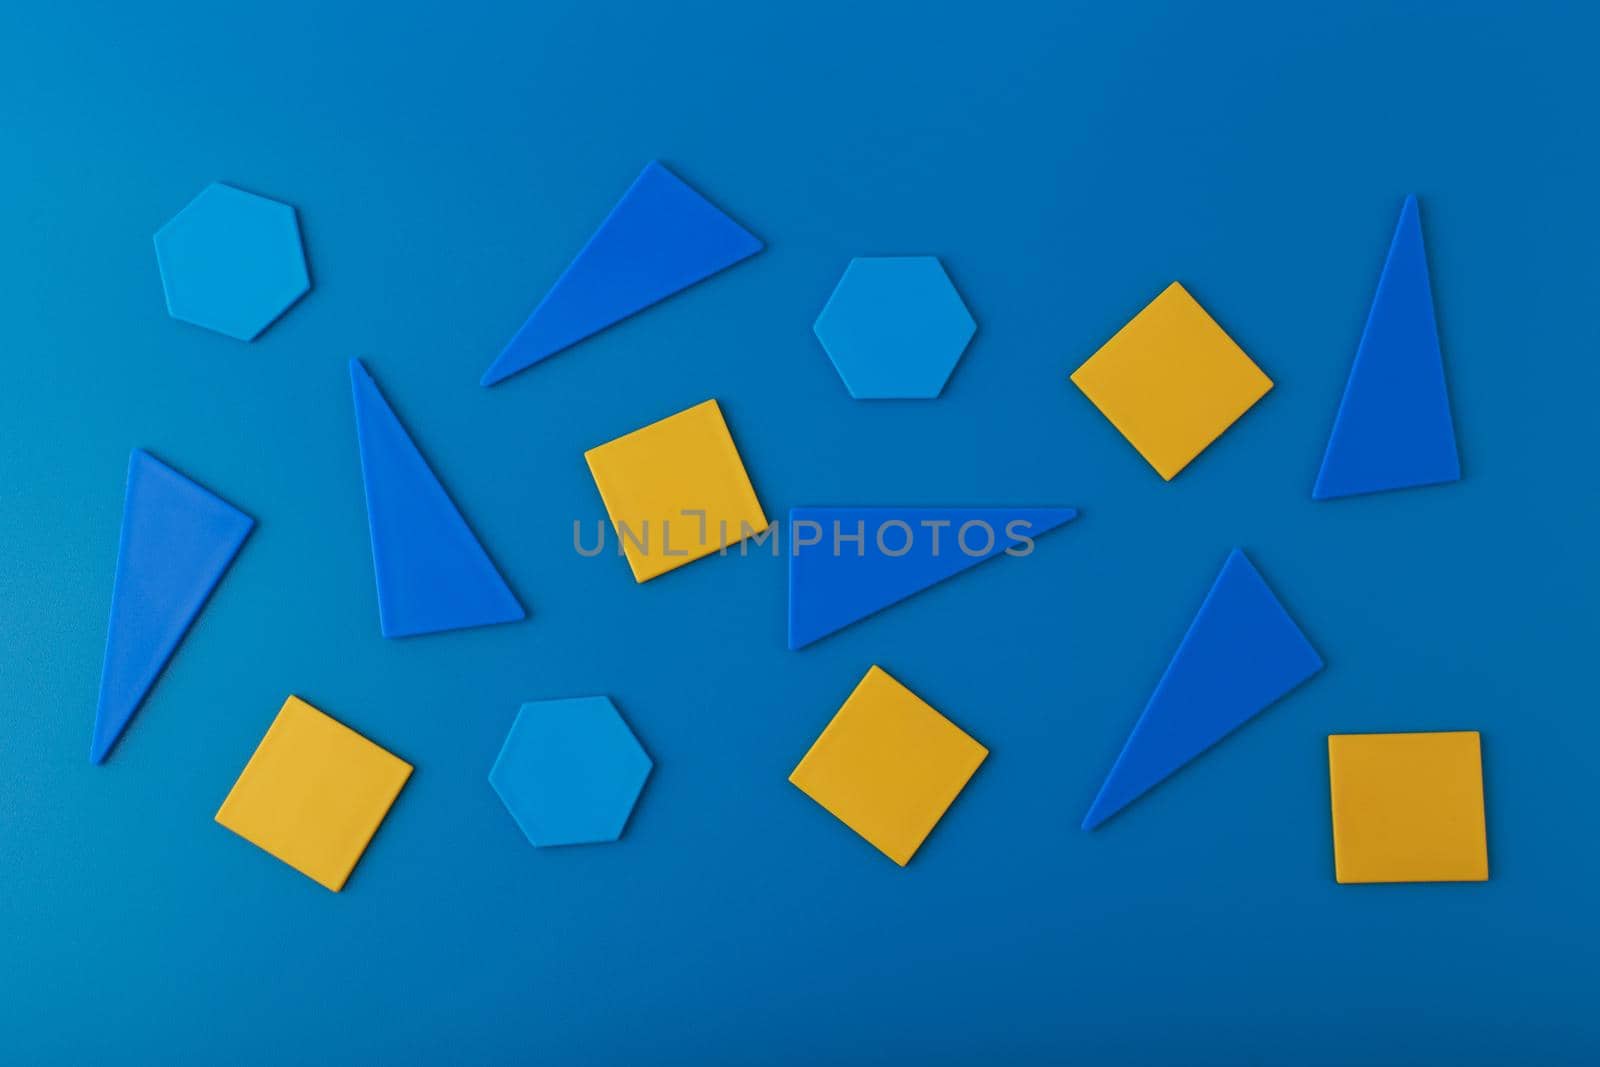 Flat lay with blue and yellow geometric figures on blue background by Senorina_Irina